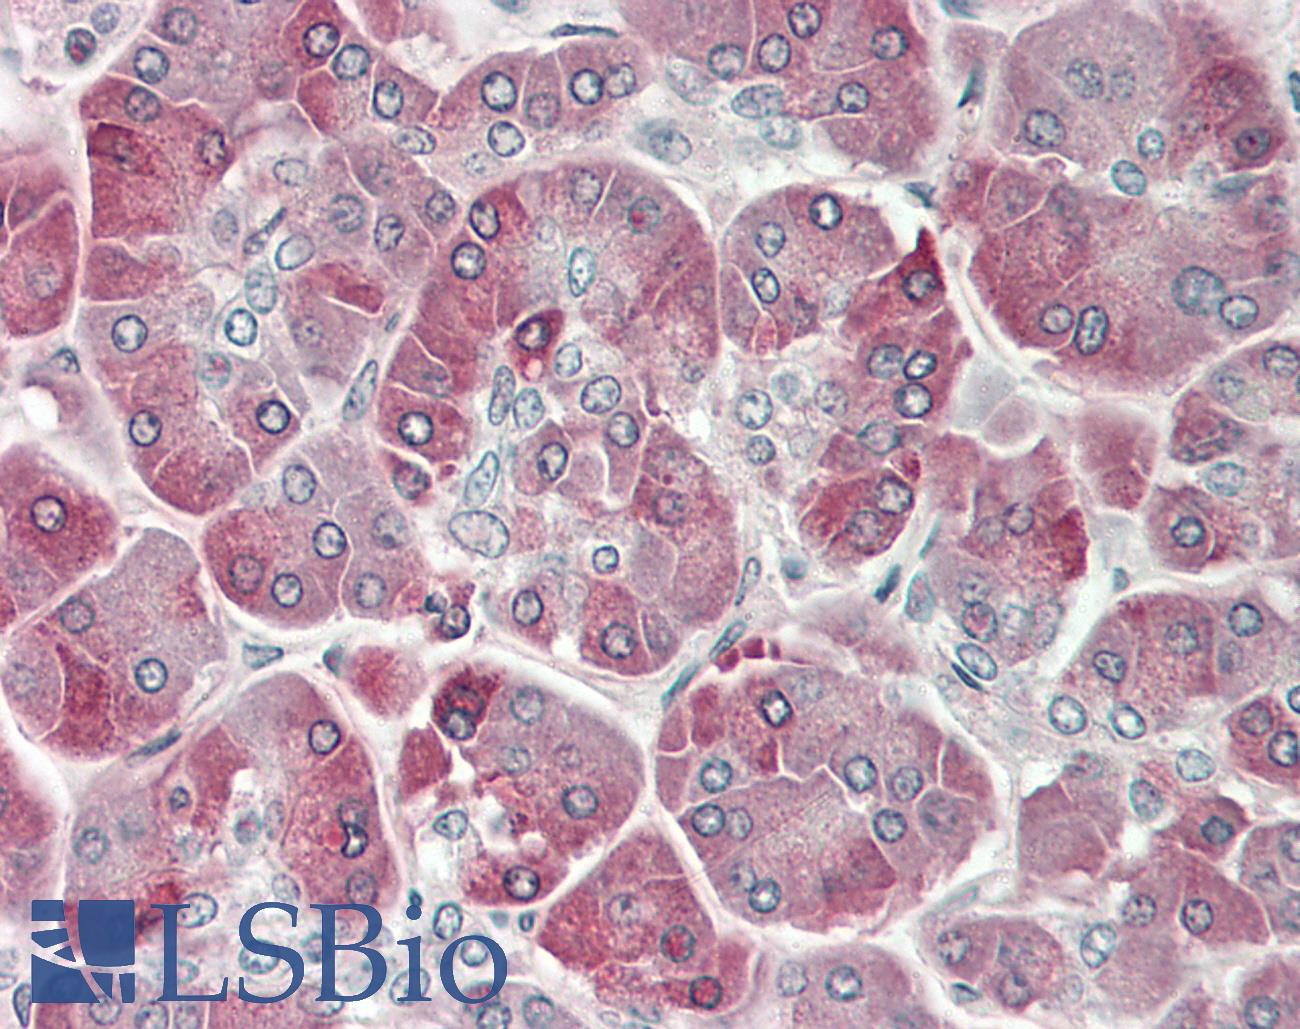 Trypsin Antibody - Human Pancreas: Formalin-Fixed, Paraffin-Embedded (FFPE)